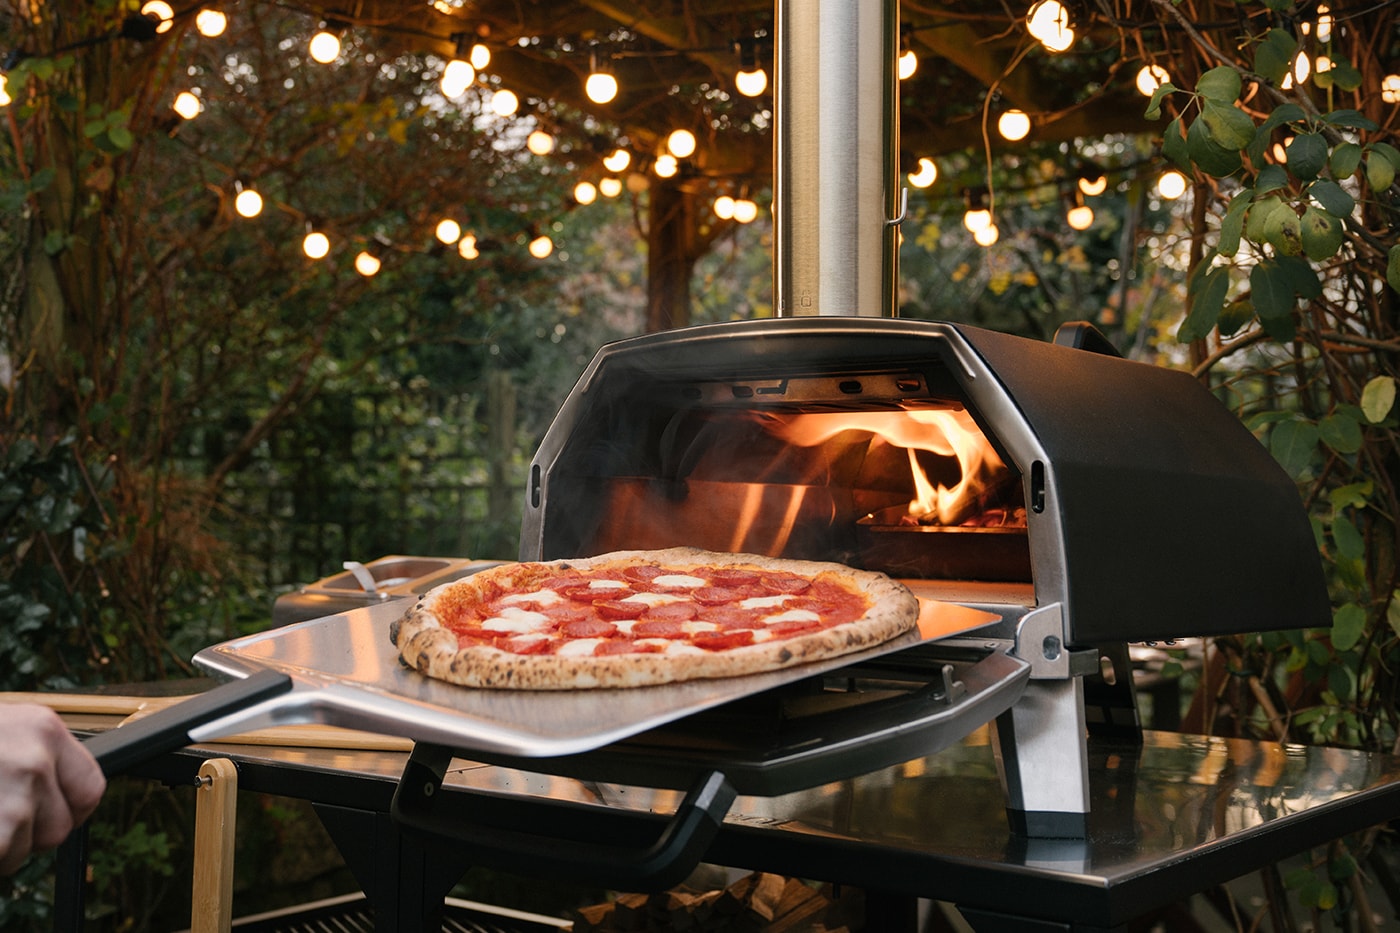 Ooni Karu 16 Multi-Fuel Pizza Oven release info backyard pizza home charcoal wood propane Associazione Verace Pizza Napoletana Neapolitan